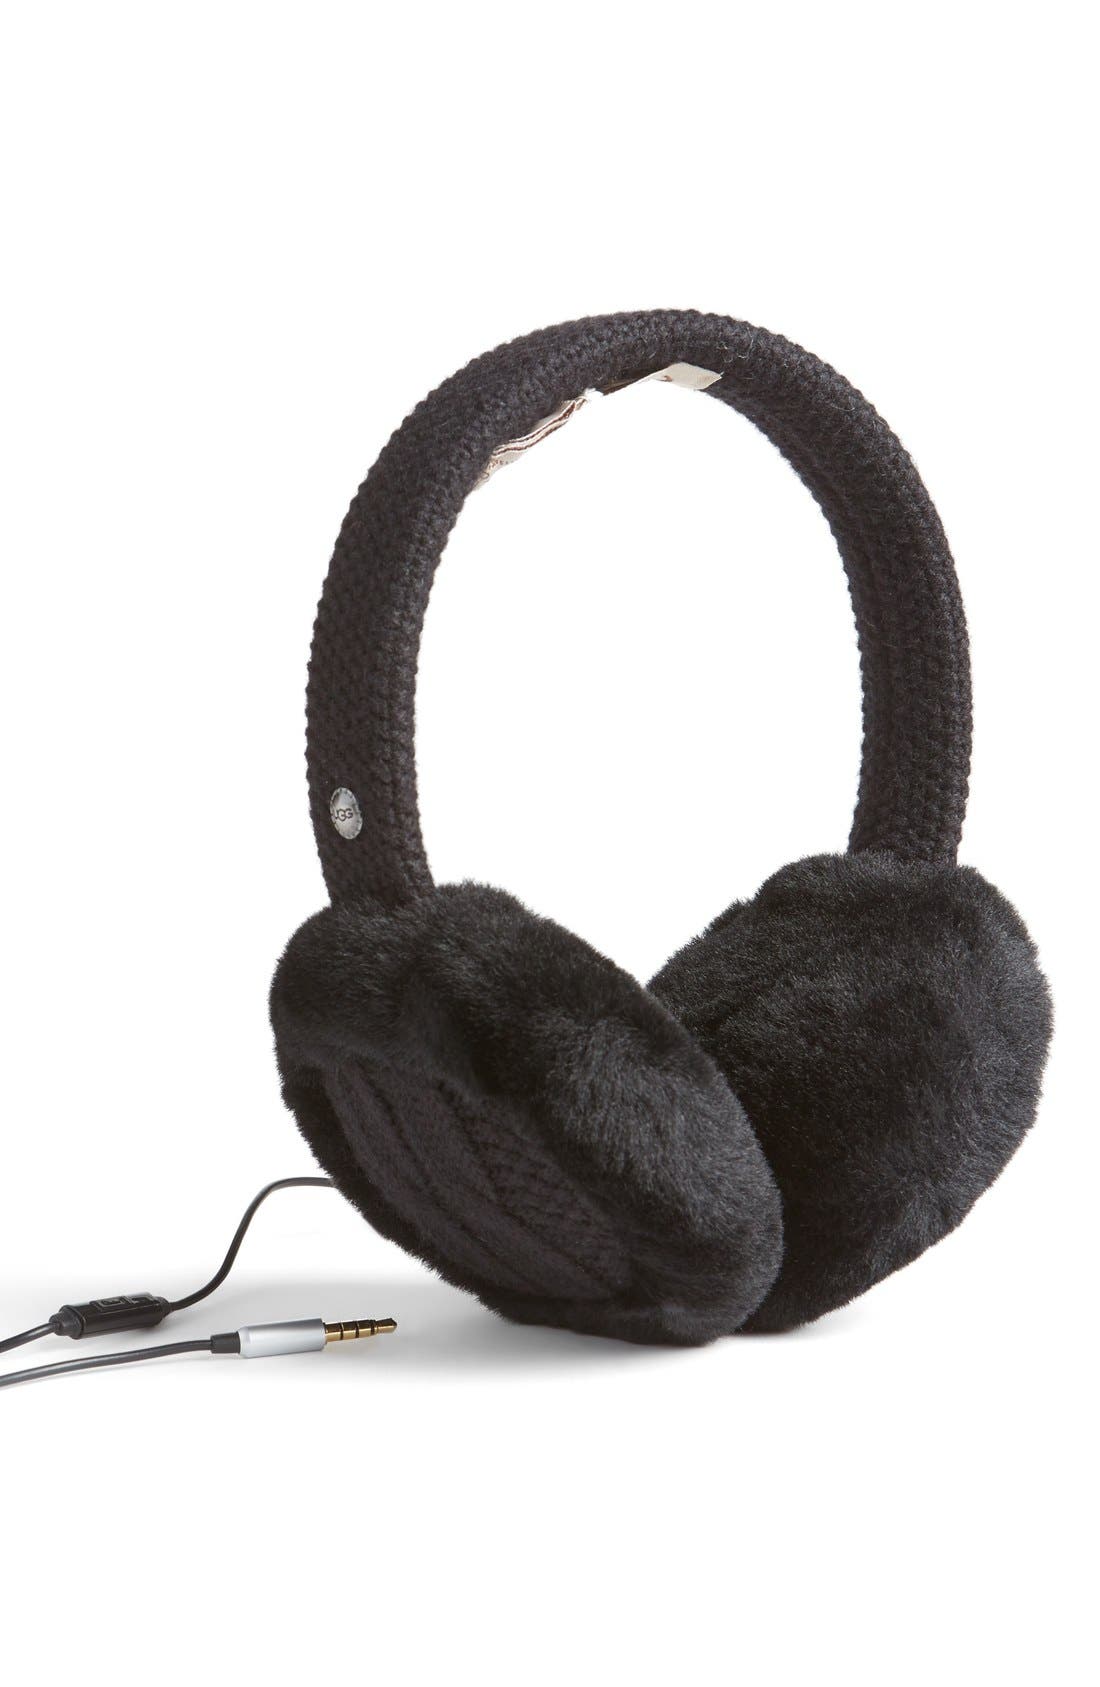 ugg earmuff headphones